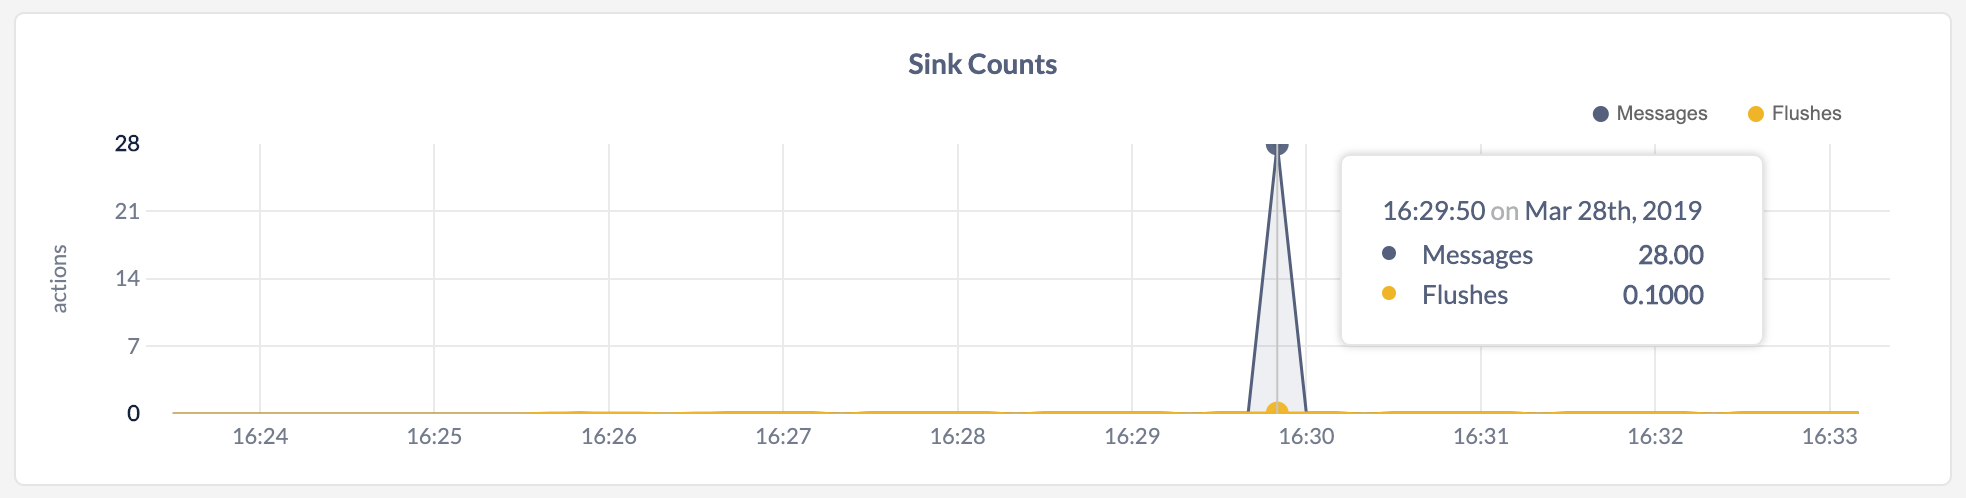 CockroachDB Admin UI Sink Counts graph